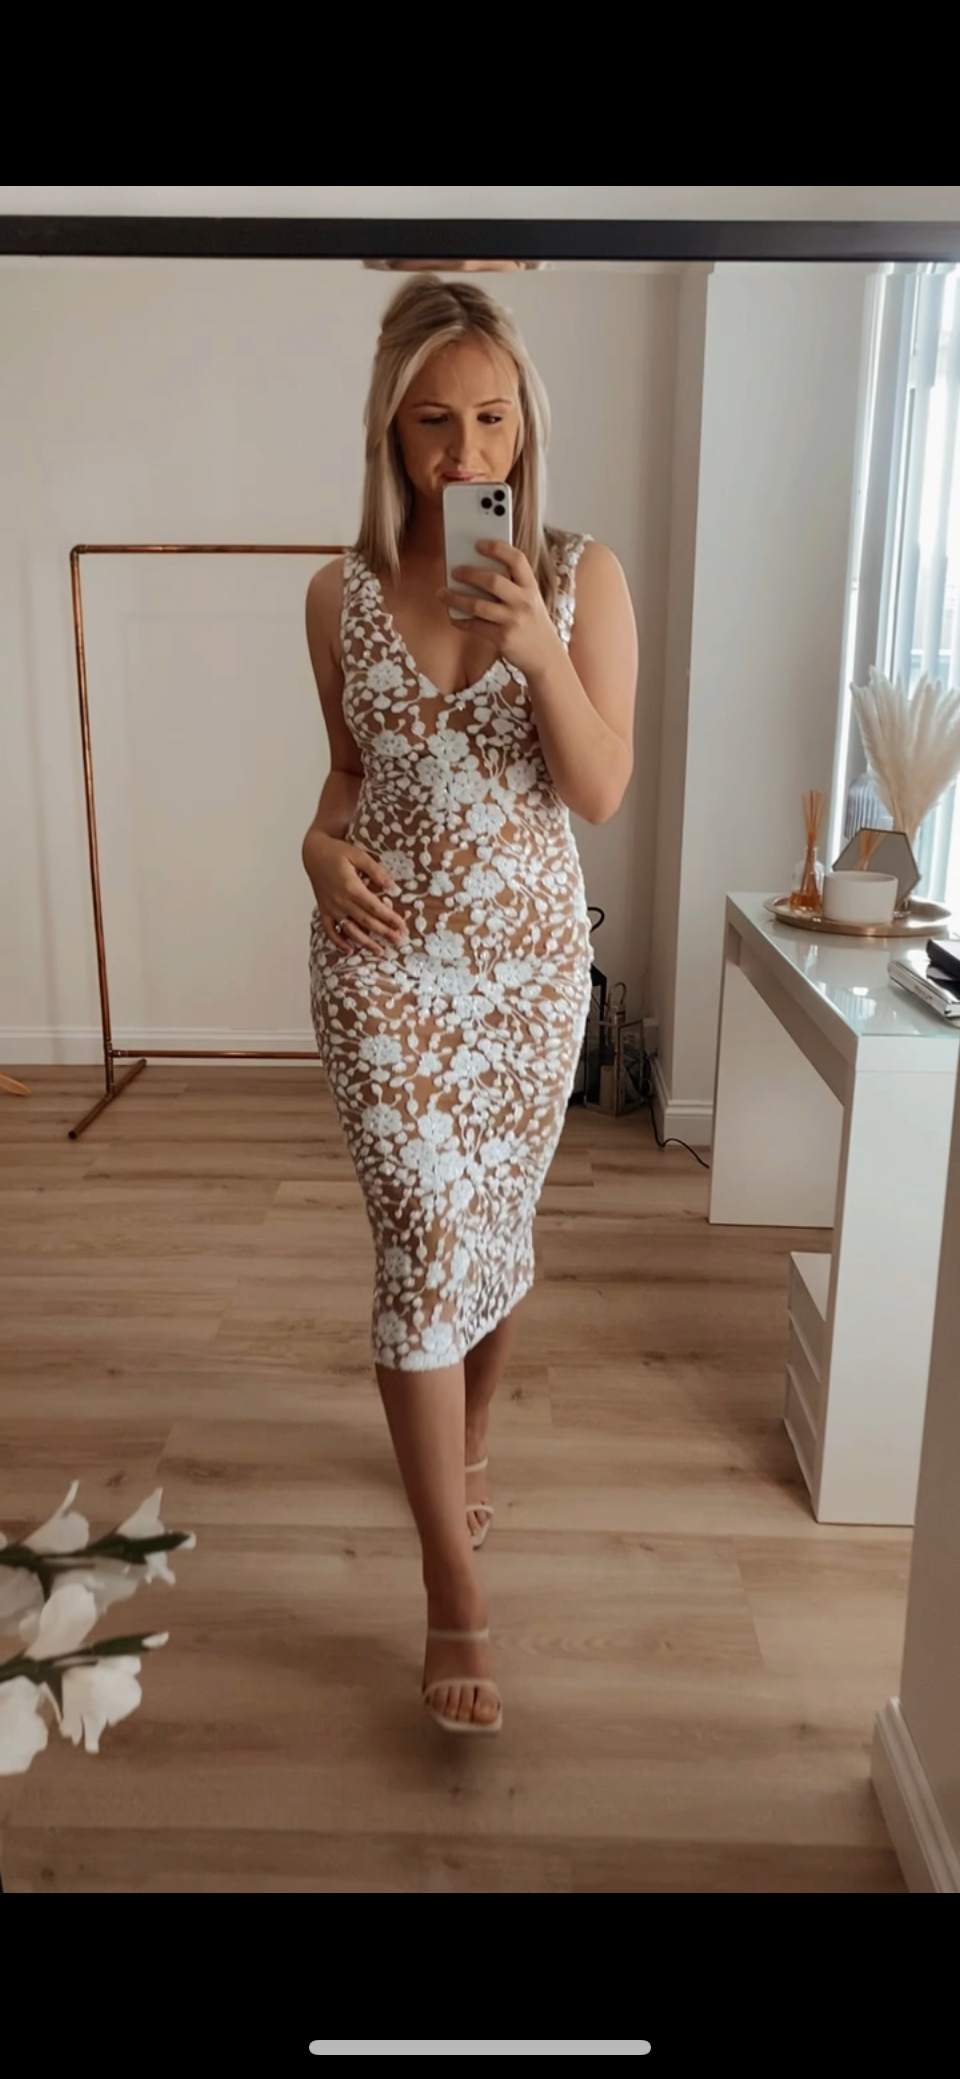 Nadine Merabi Nyla Dress – Rent and Rotate